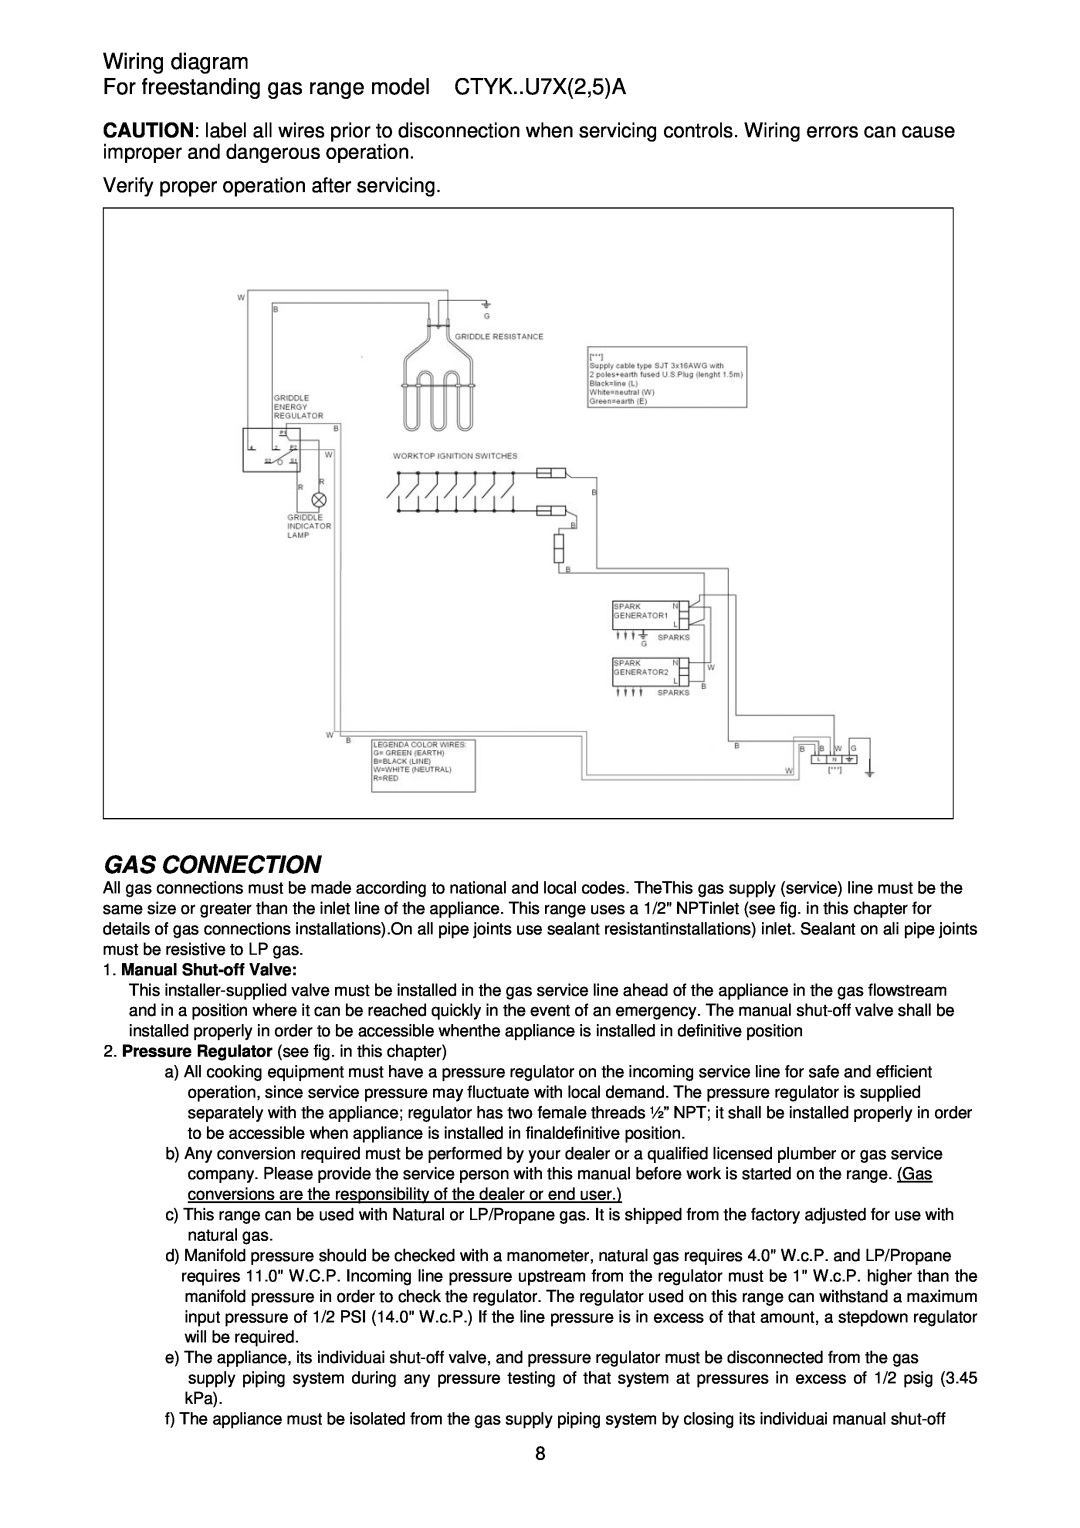 Bertazzoni CTYK..U7X(2,5)A dimensions Gas Connection, Wiring diagram, For freestanding gas range model CTYK..U7X2,5A 